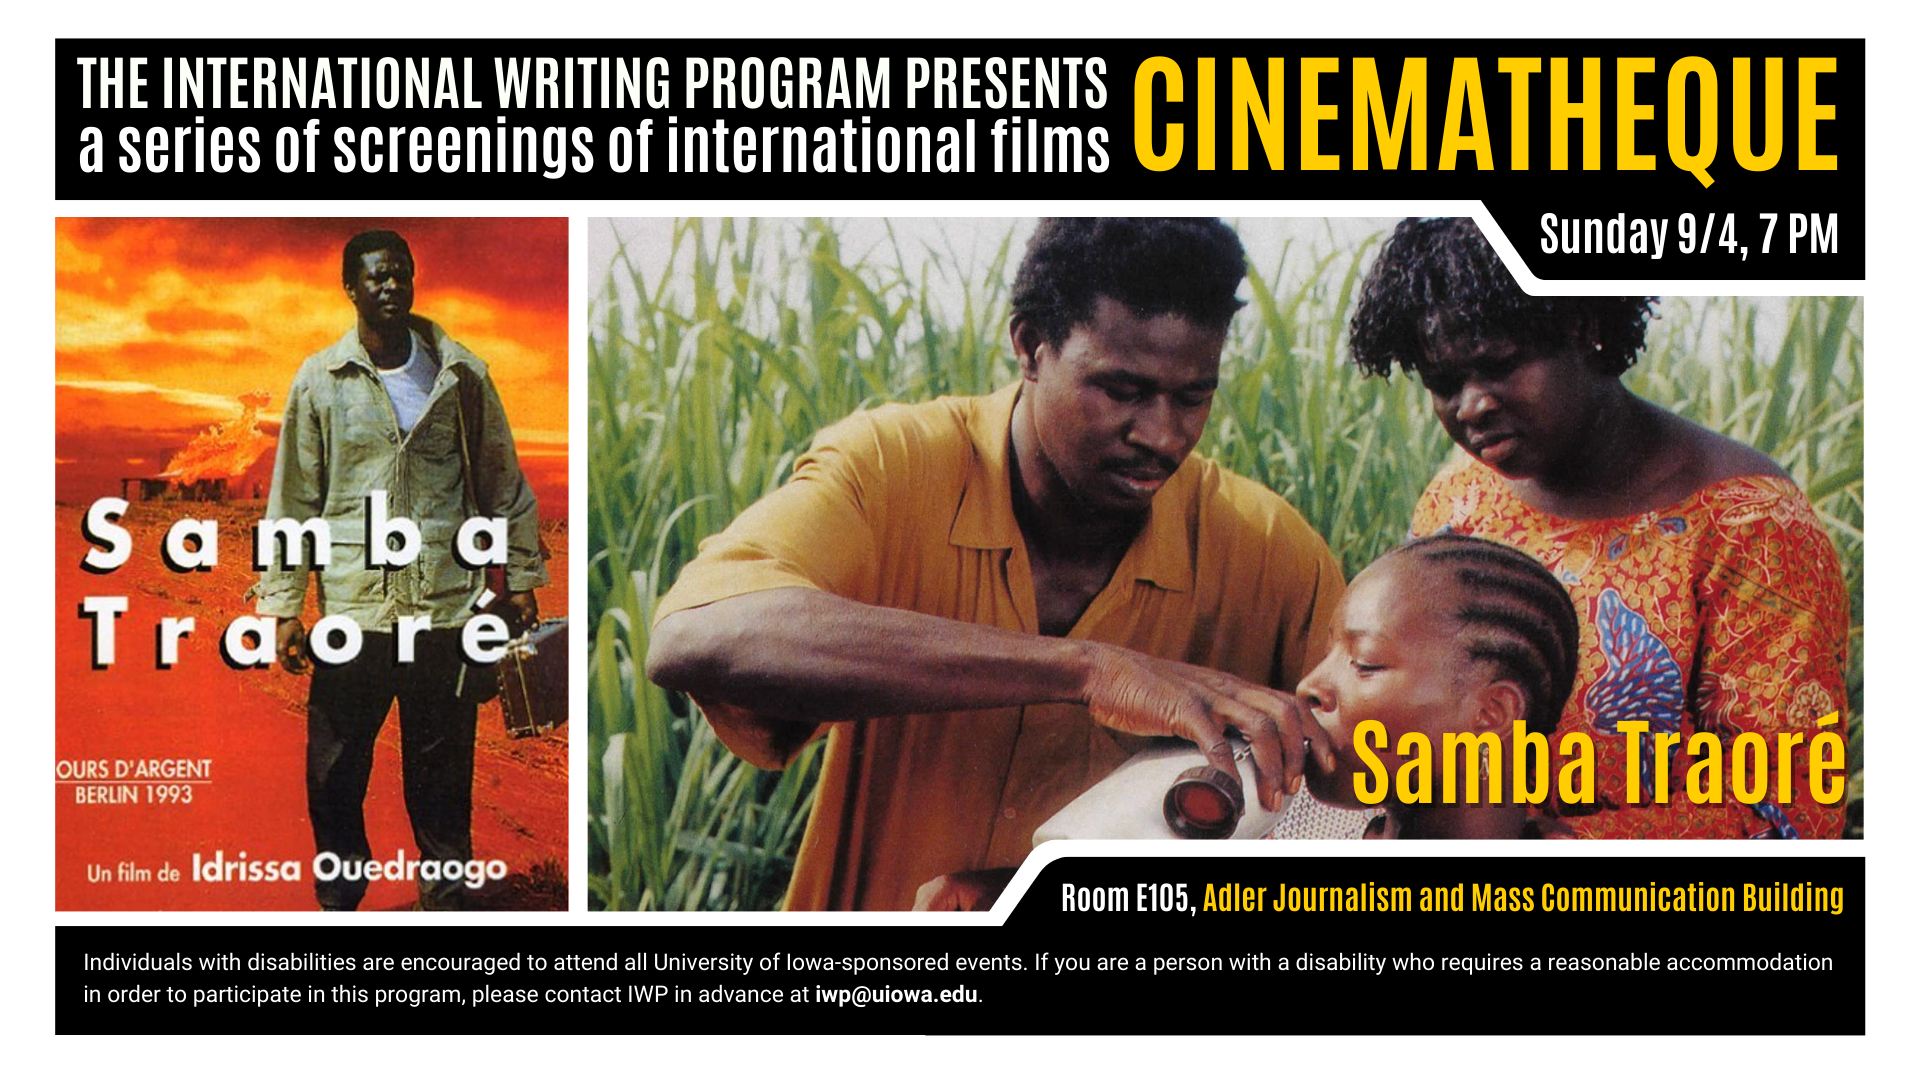 International film Samba Tradore on Sunday, 9/4 at 7pm in E105 Adler.